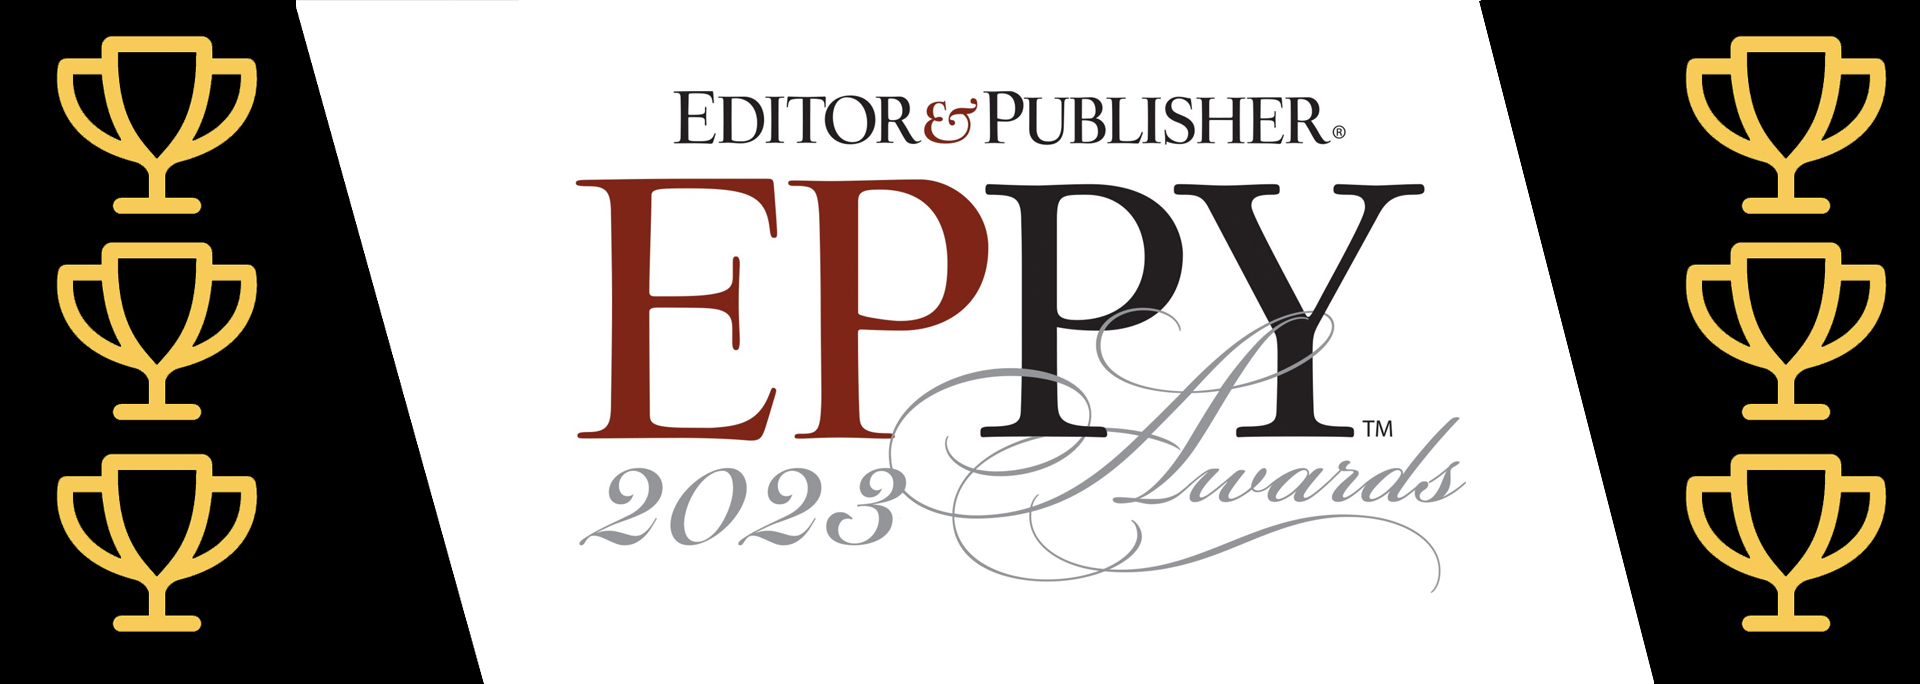 2023 Eppy Awards